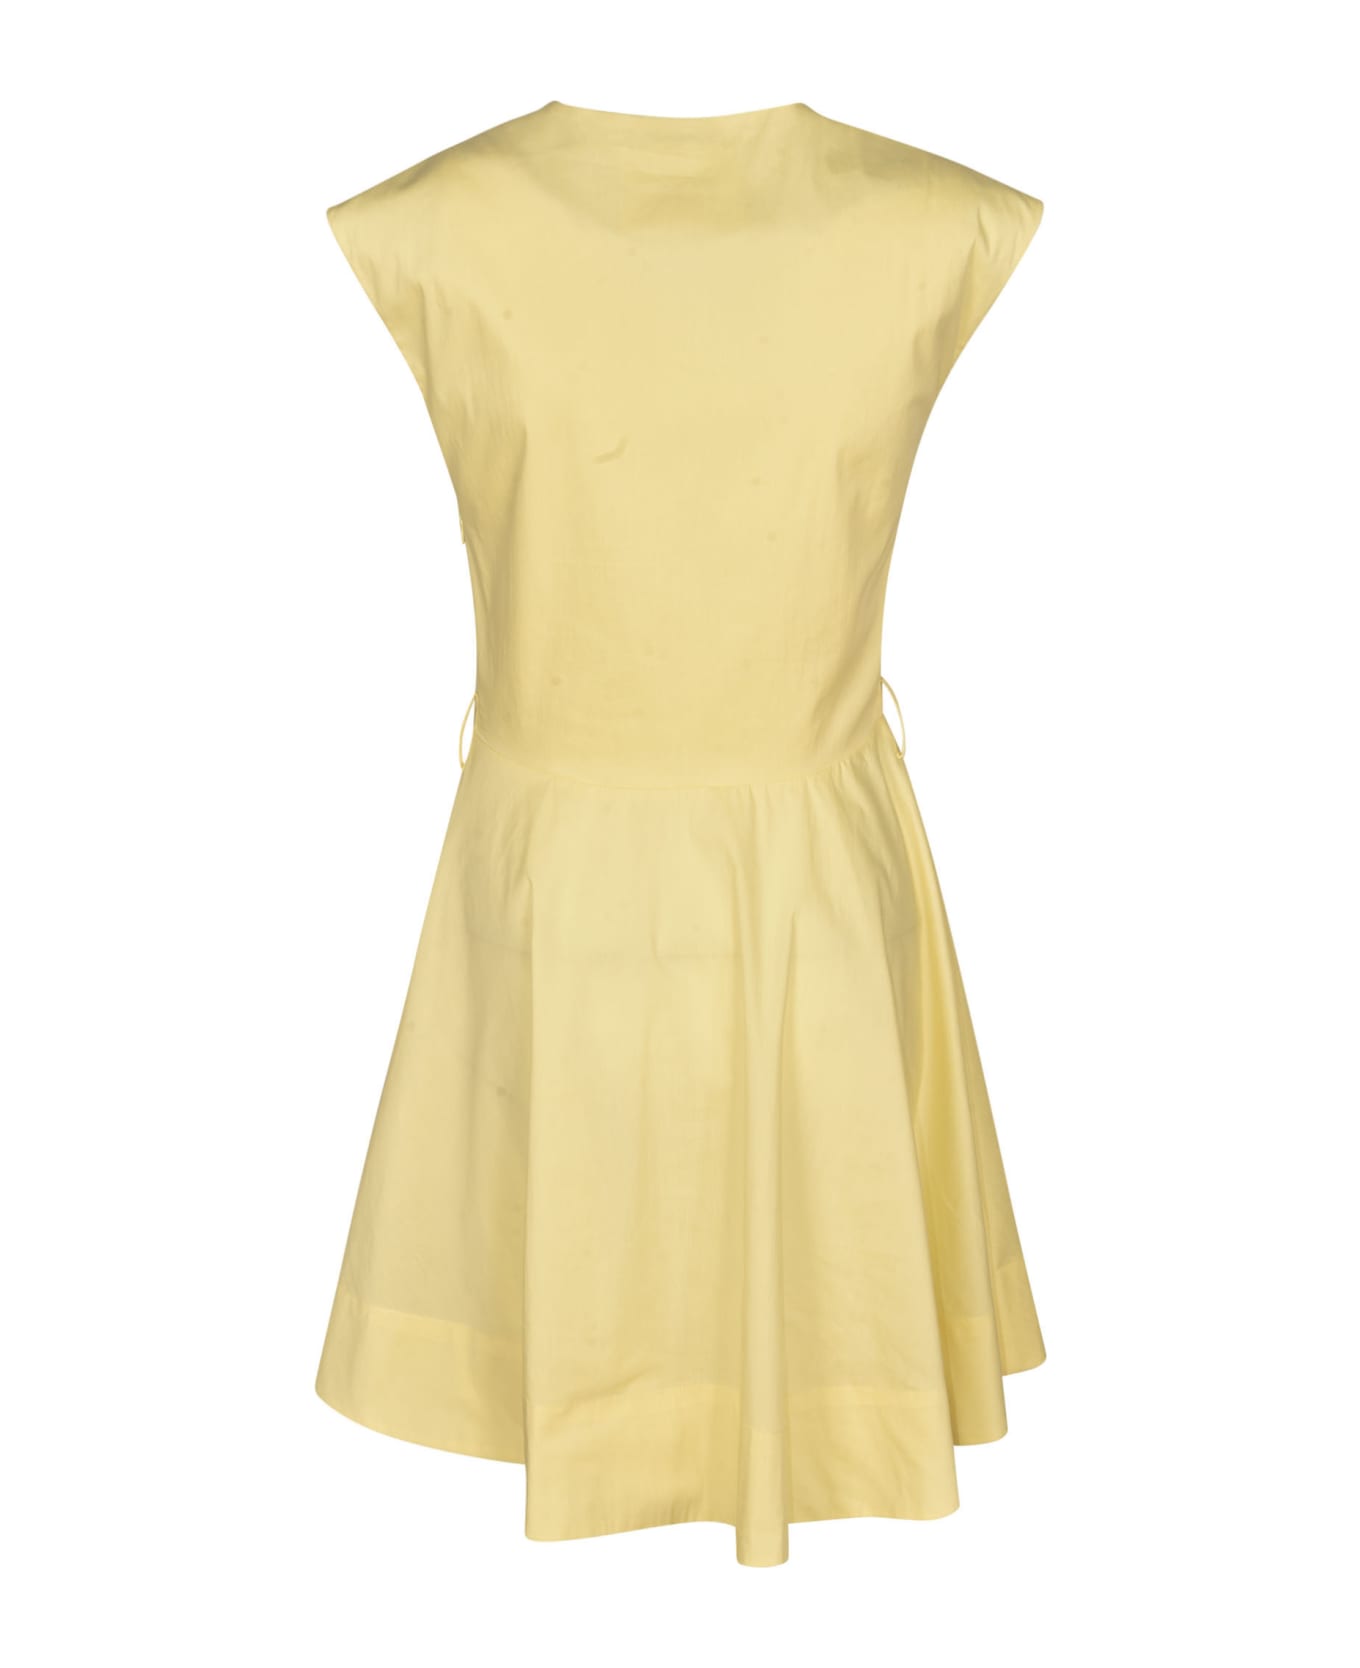 Blugirl V-neck Sleeveless Flare Dress - Yellow